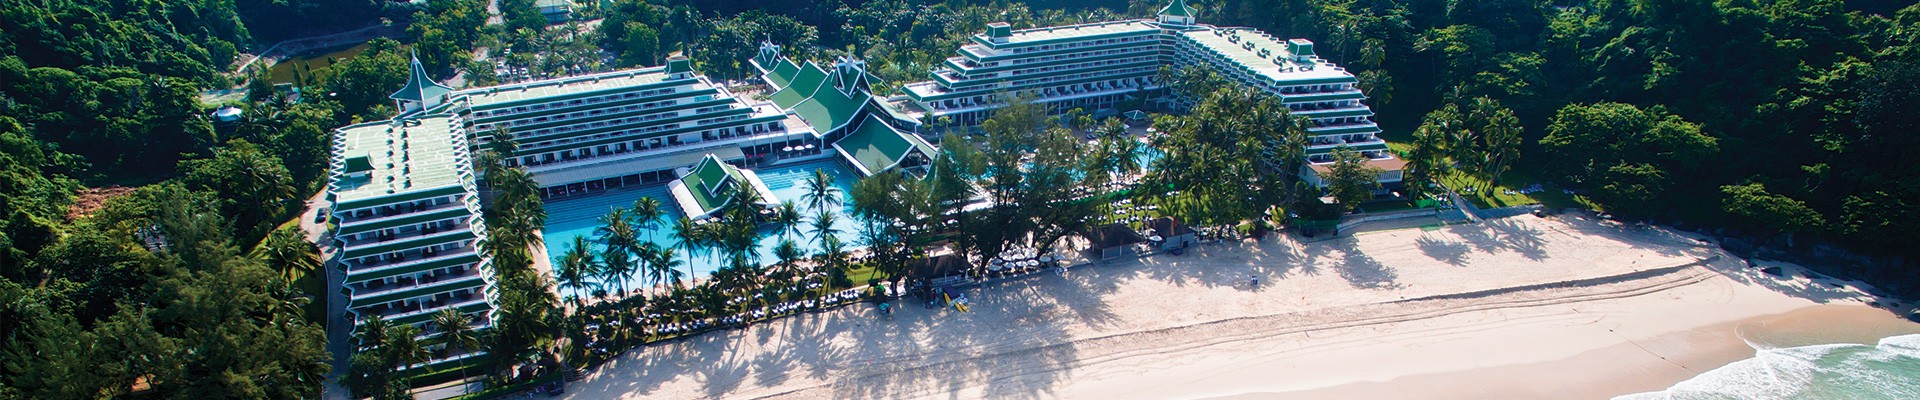 5* Le Méridien Phuket Beach Resort - Phuket Package (7nights)